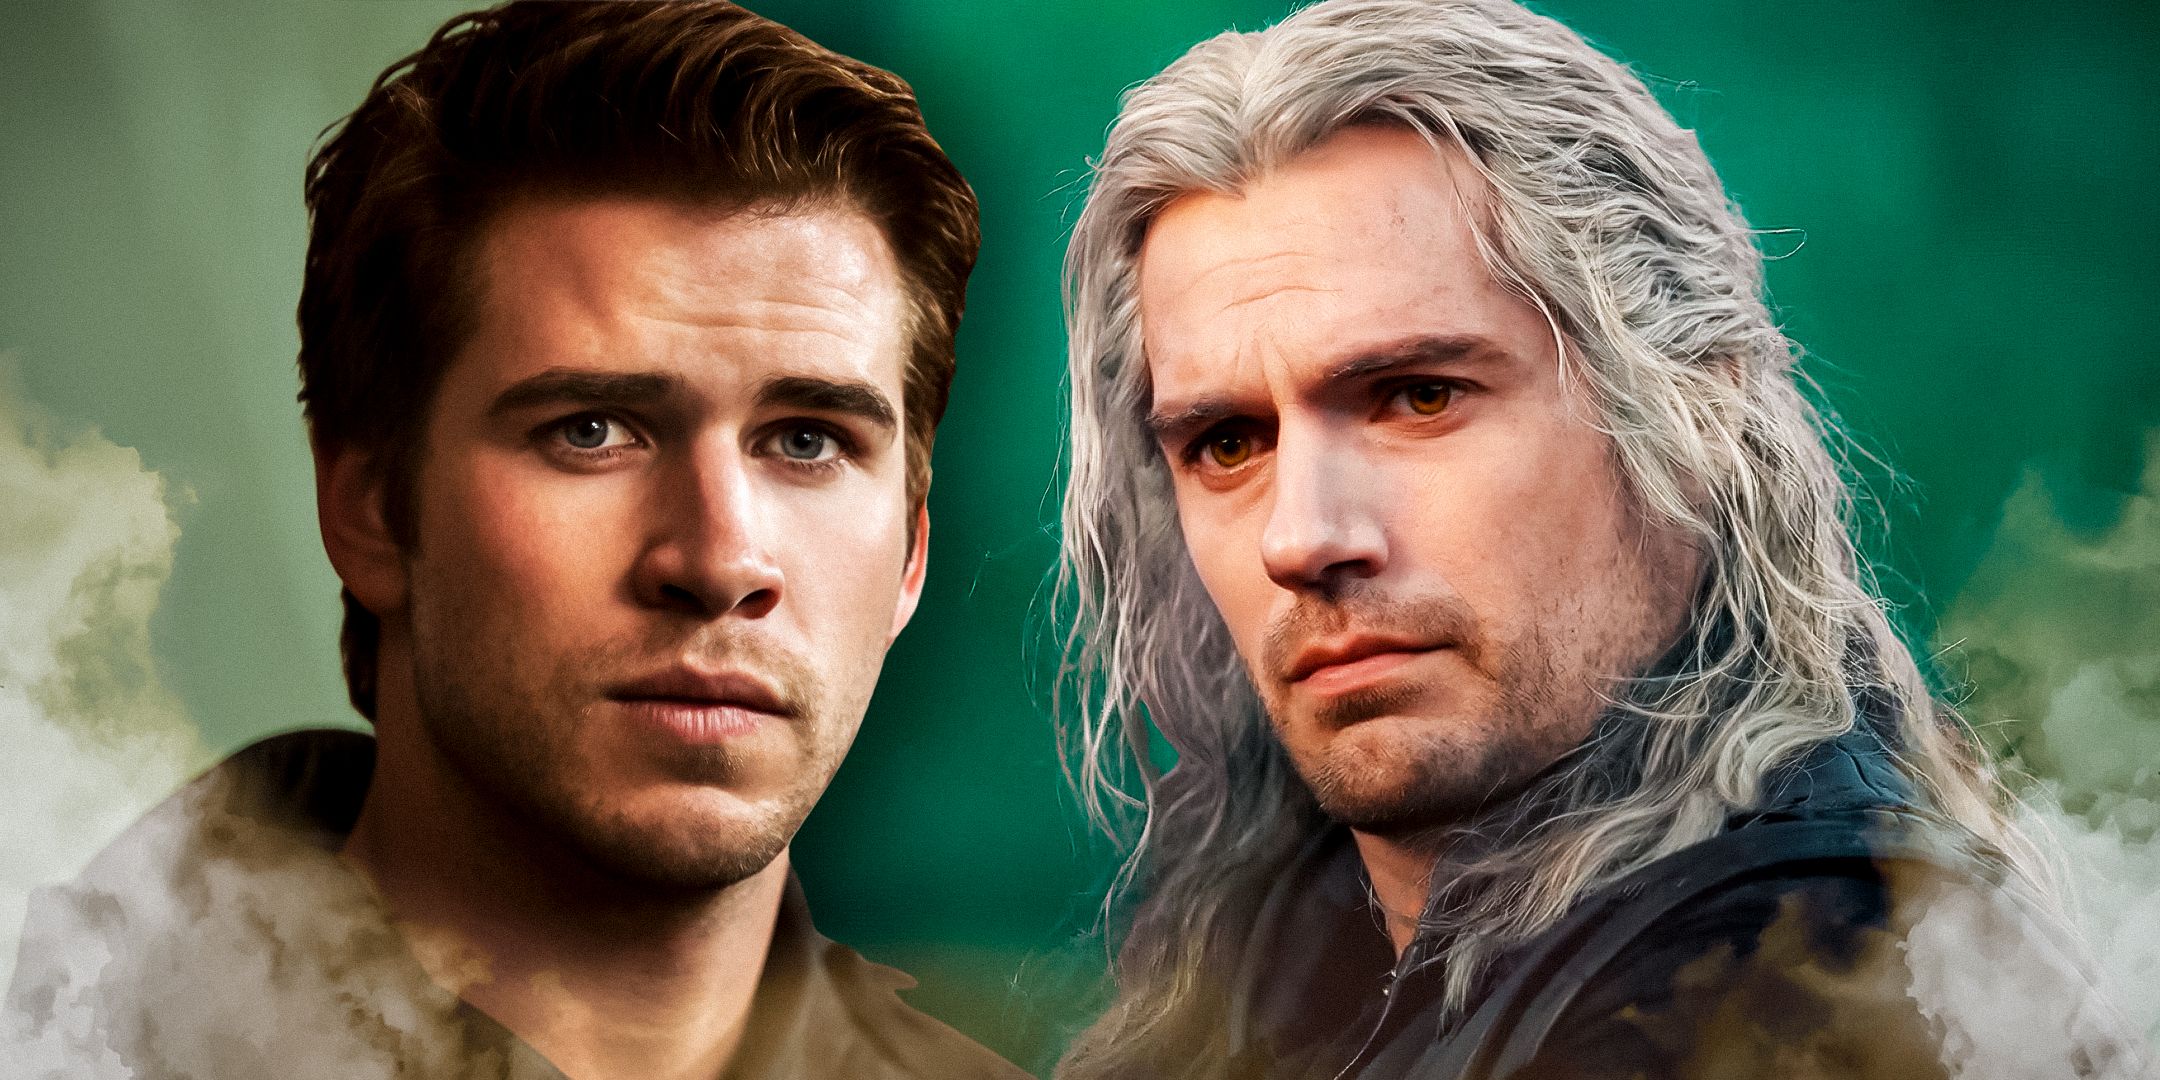 Custom image of Liam Hemsworth and Henry Cavill as Geralt of Rivia